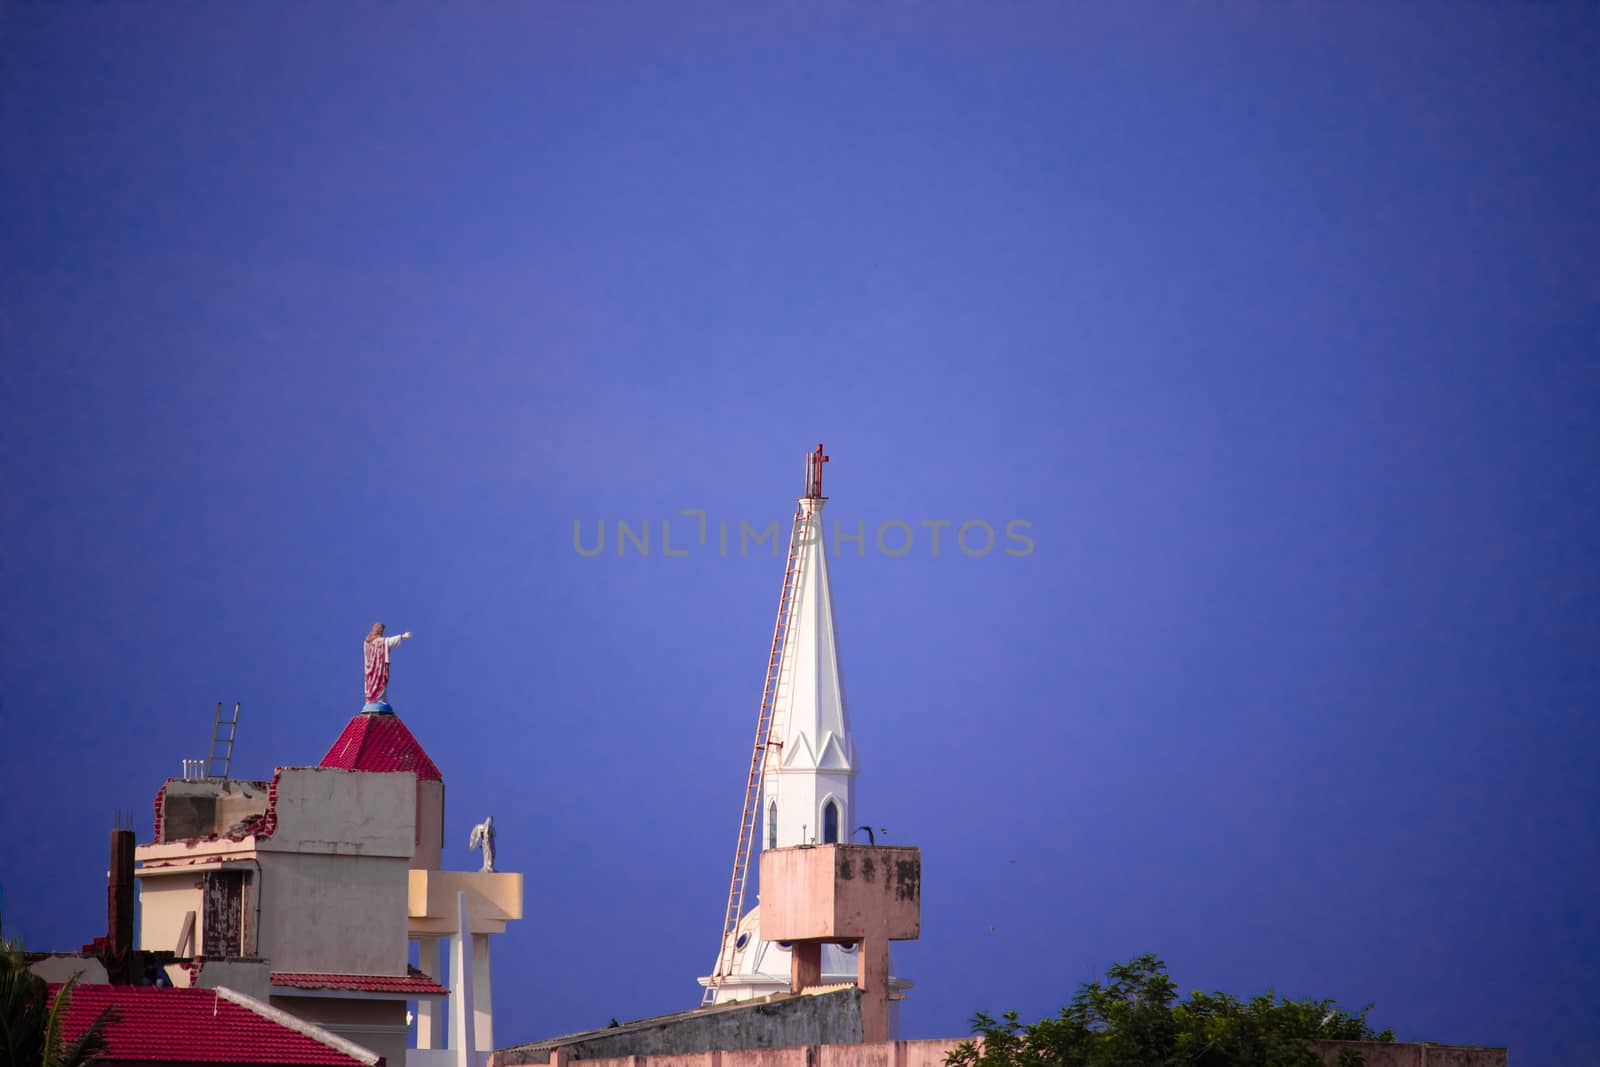 Church steeple against blue skies in chennai by 9500102400